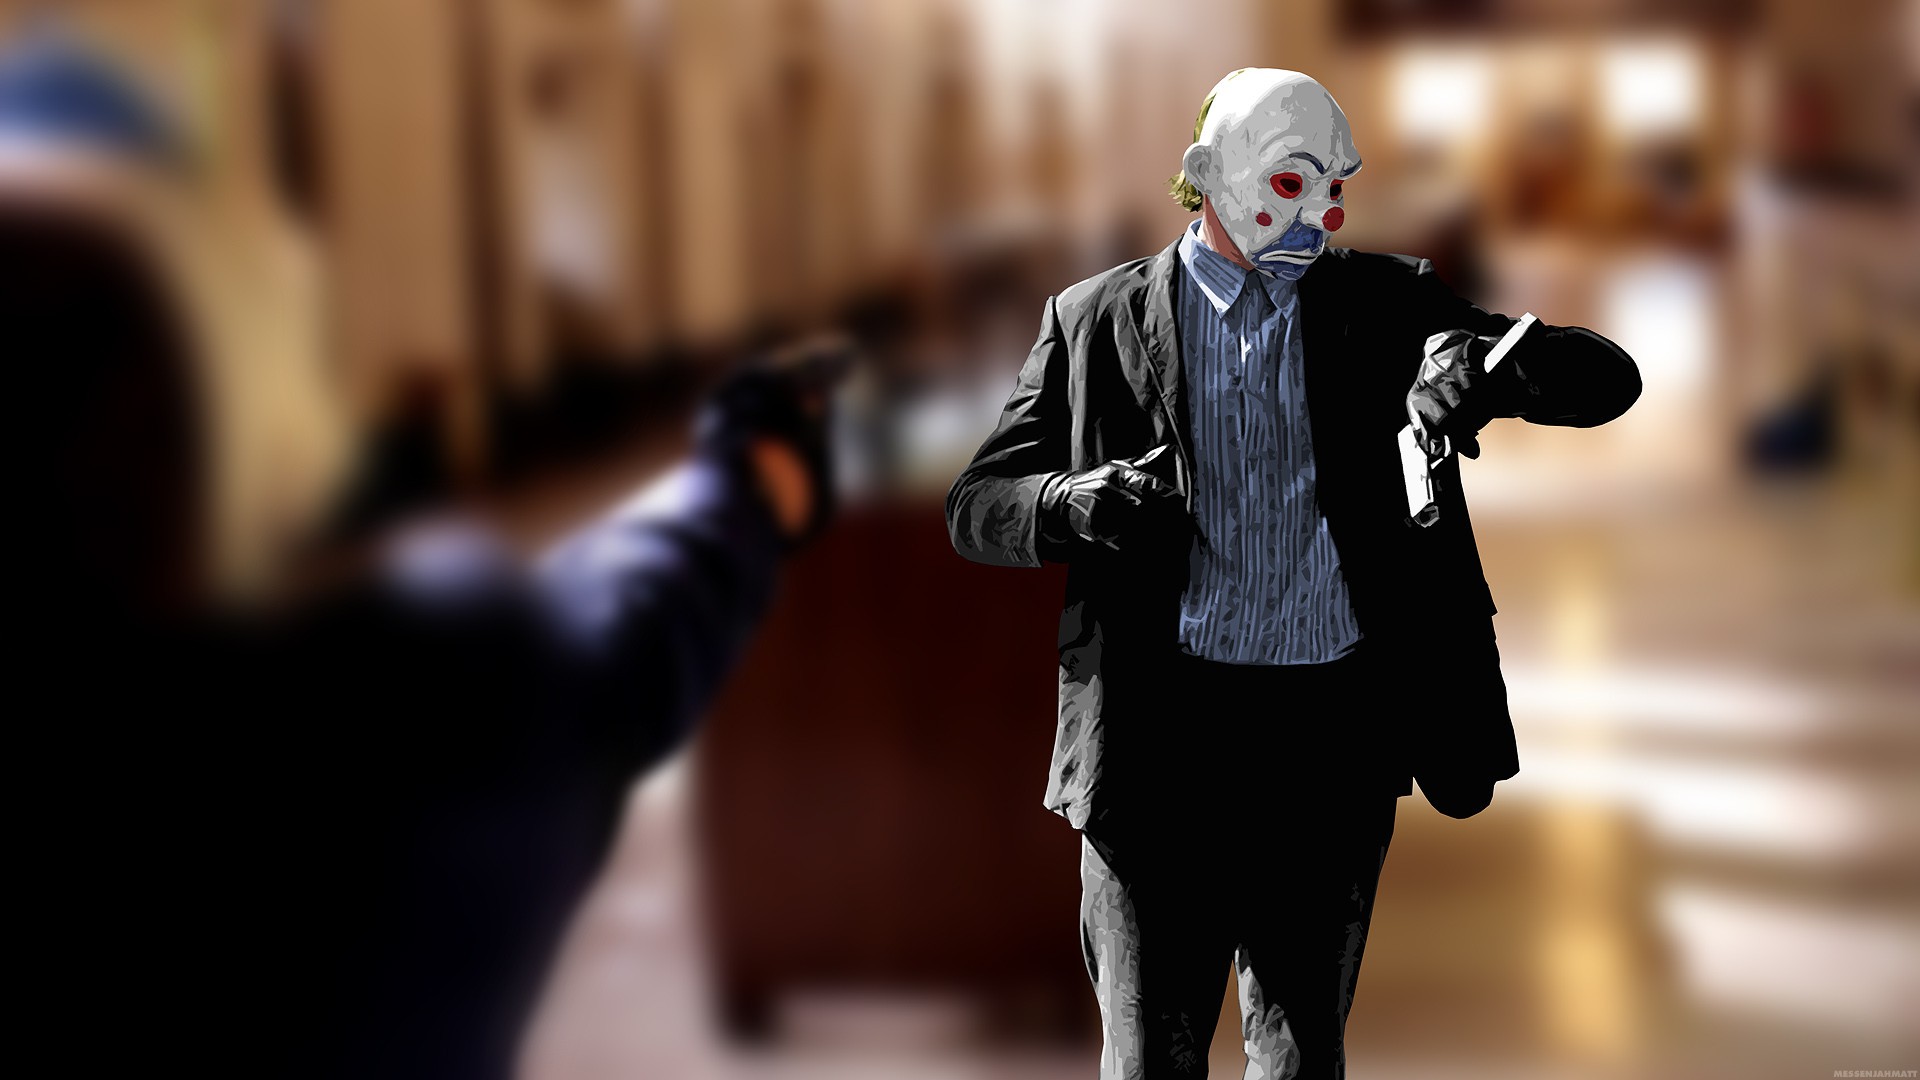 Joker Batman Digital Art The Dark Knight Clowns MessenjahMatt Heath Ledger Movies Gun Mask Depth Of  1920x1080